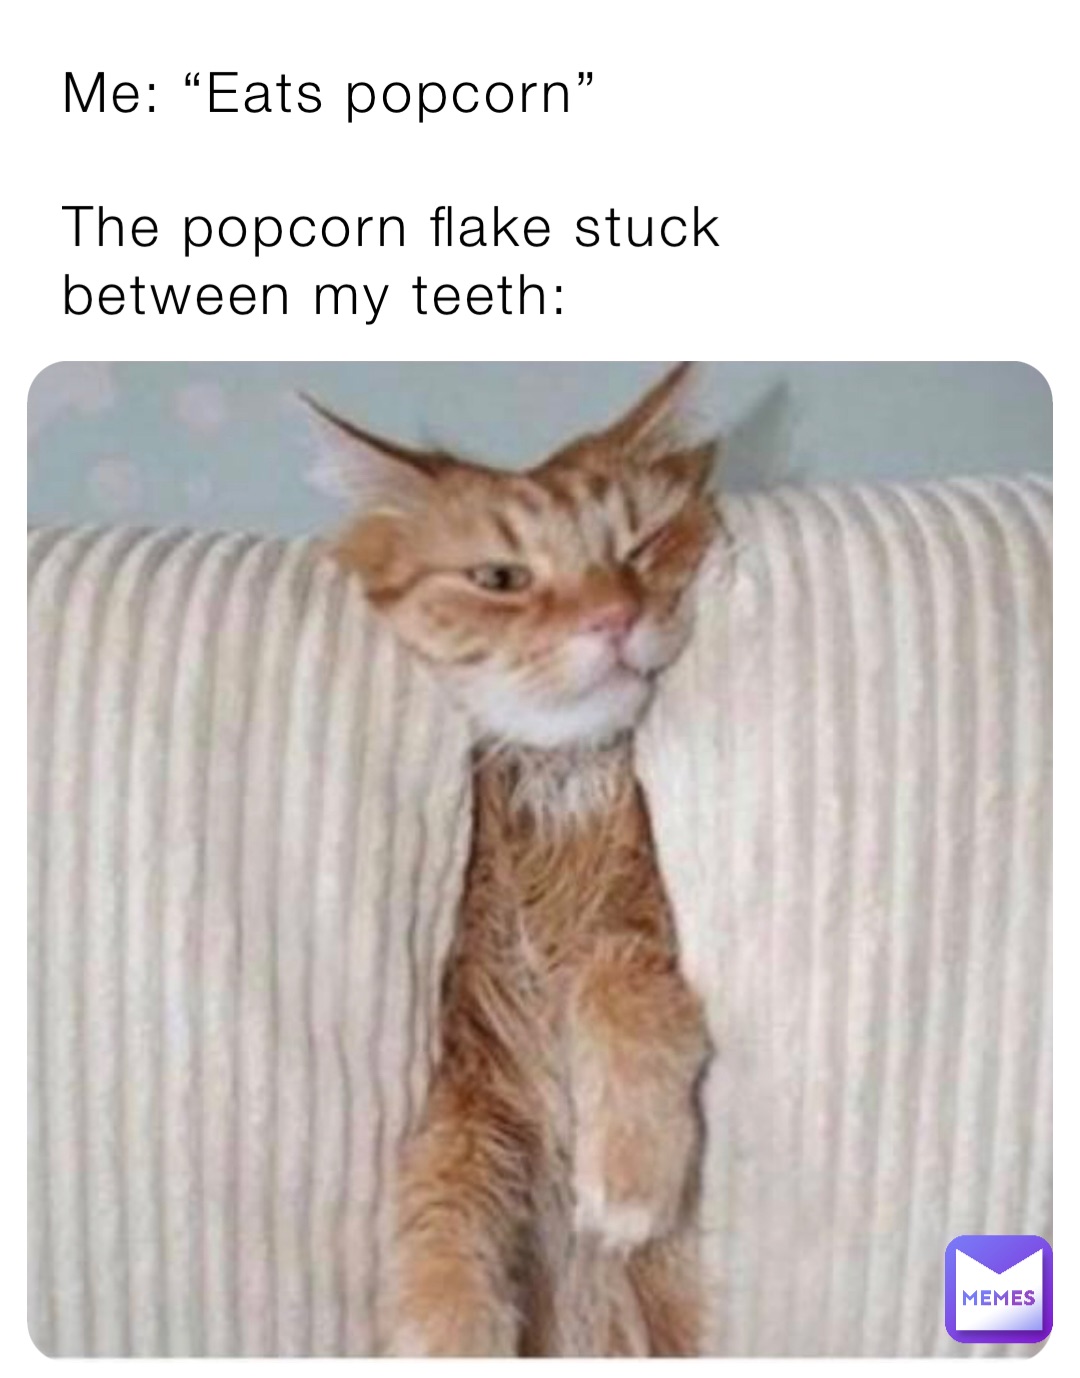 Me: “Eats popcorn”

The popcorn flake stuck between my teeth: